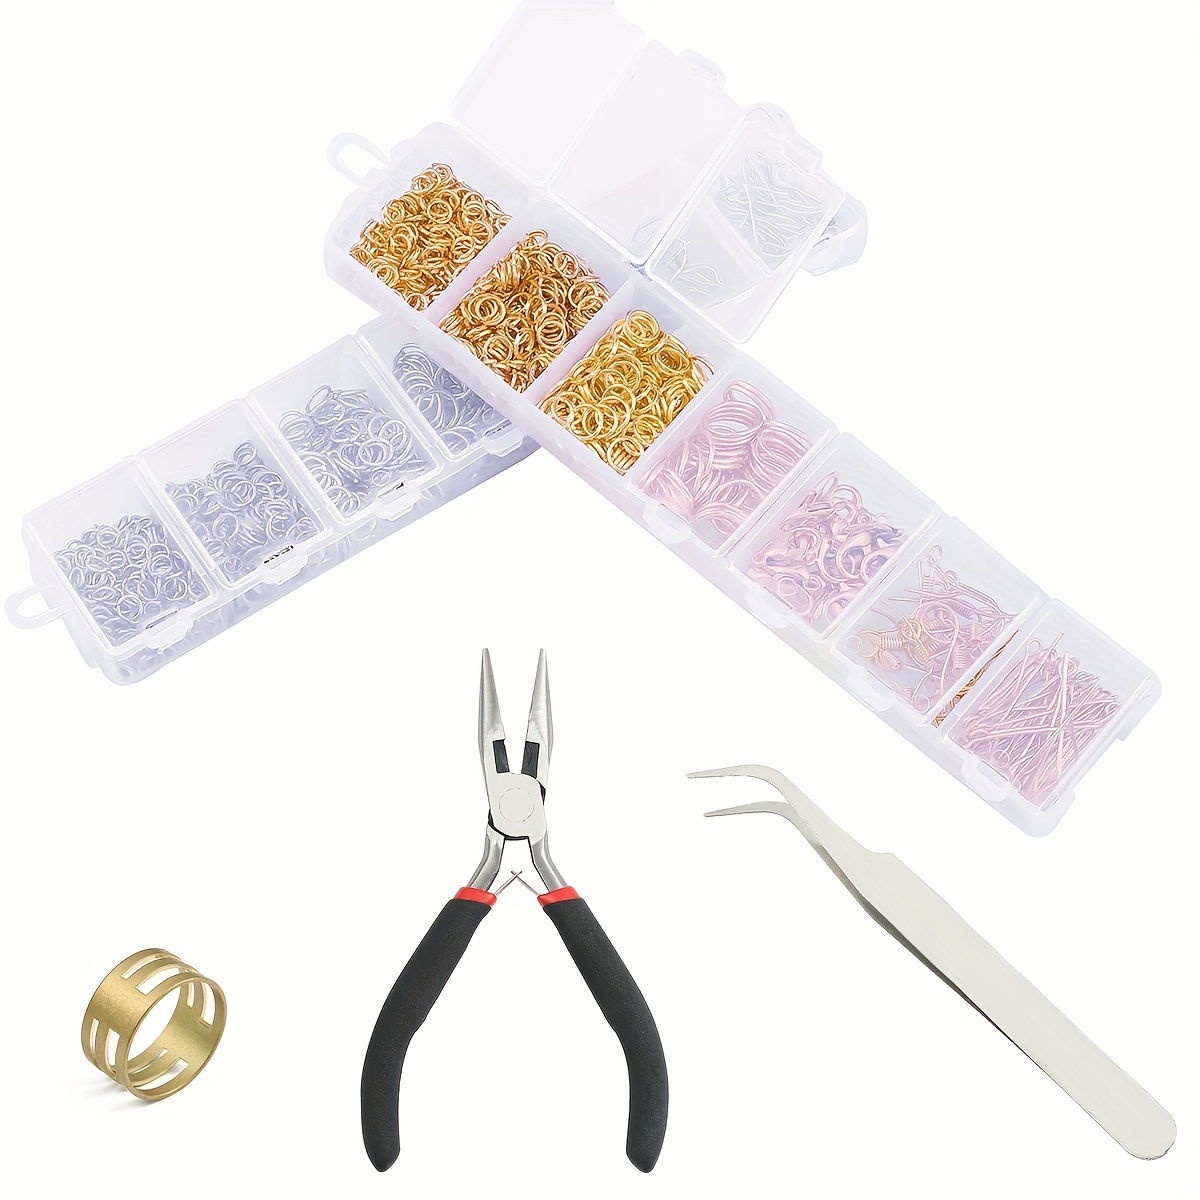 Jewelry Making Kits Supplies, Jewelry Findings Set, Jewelry Needle